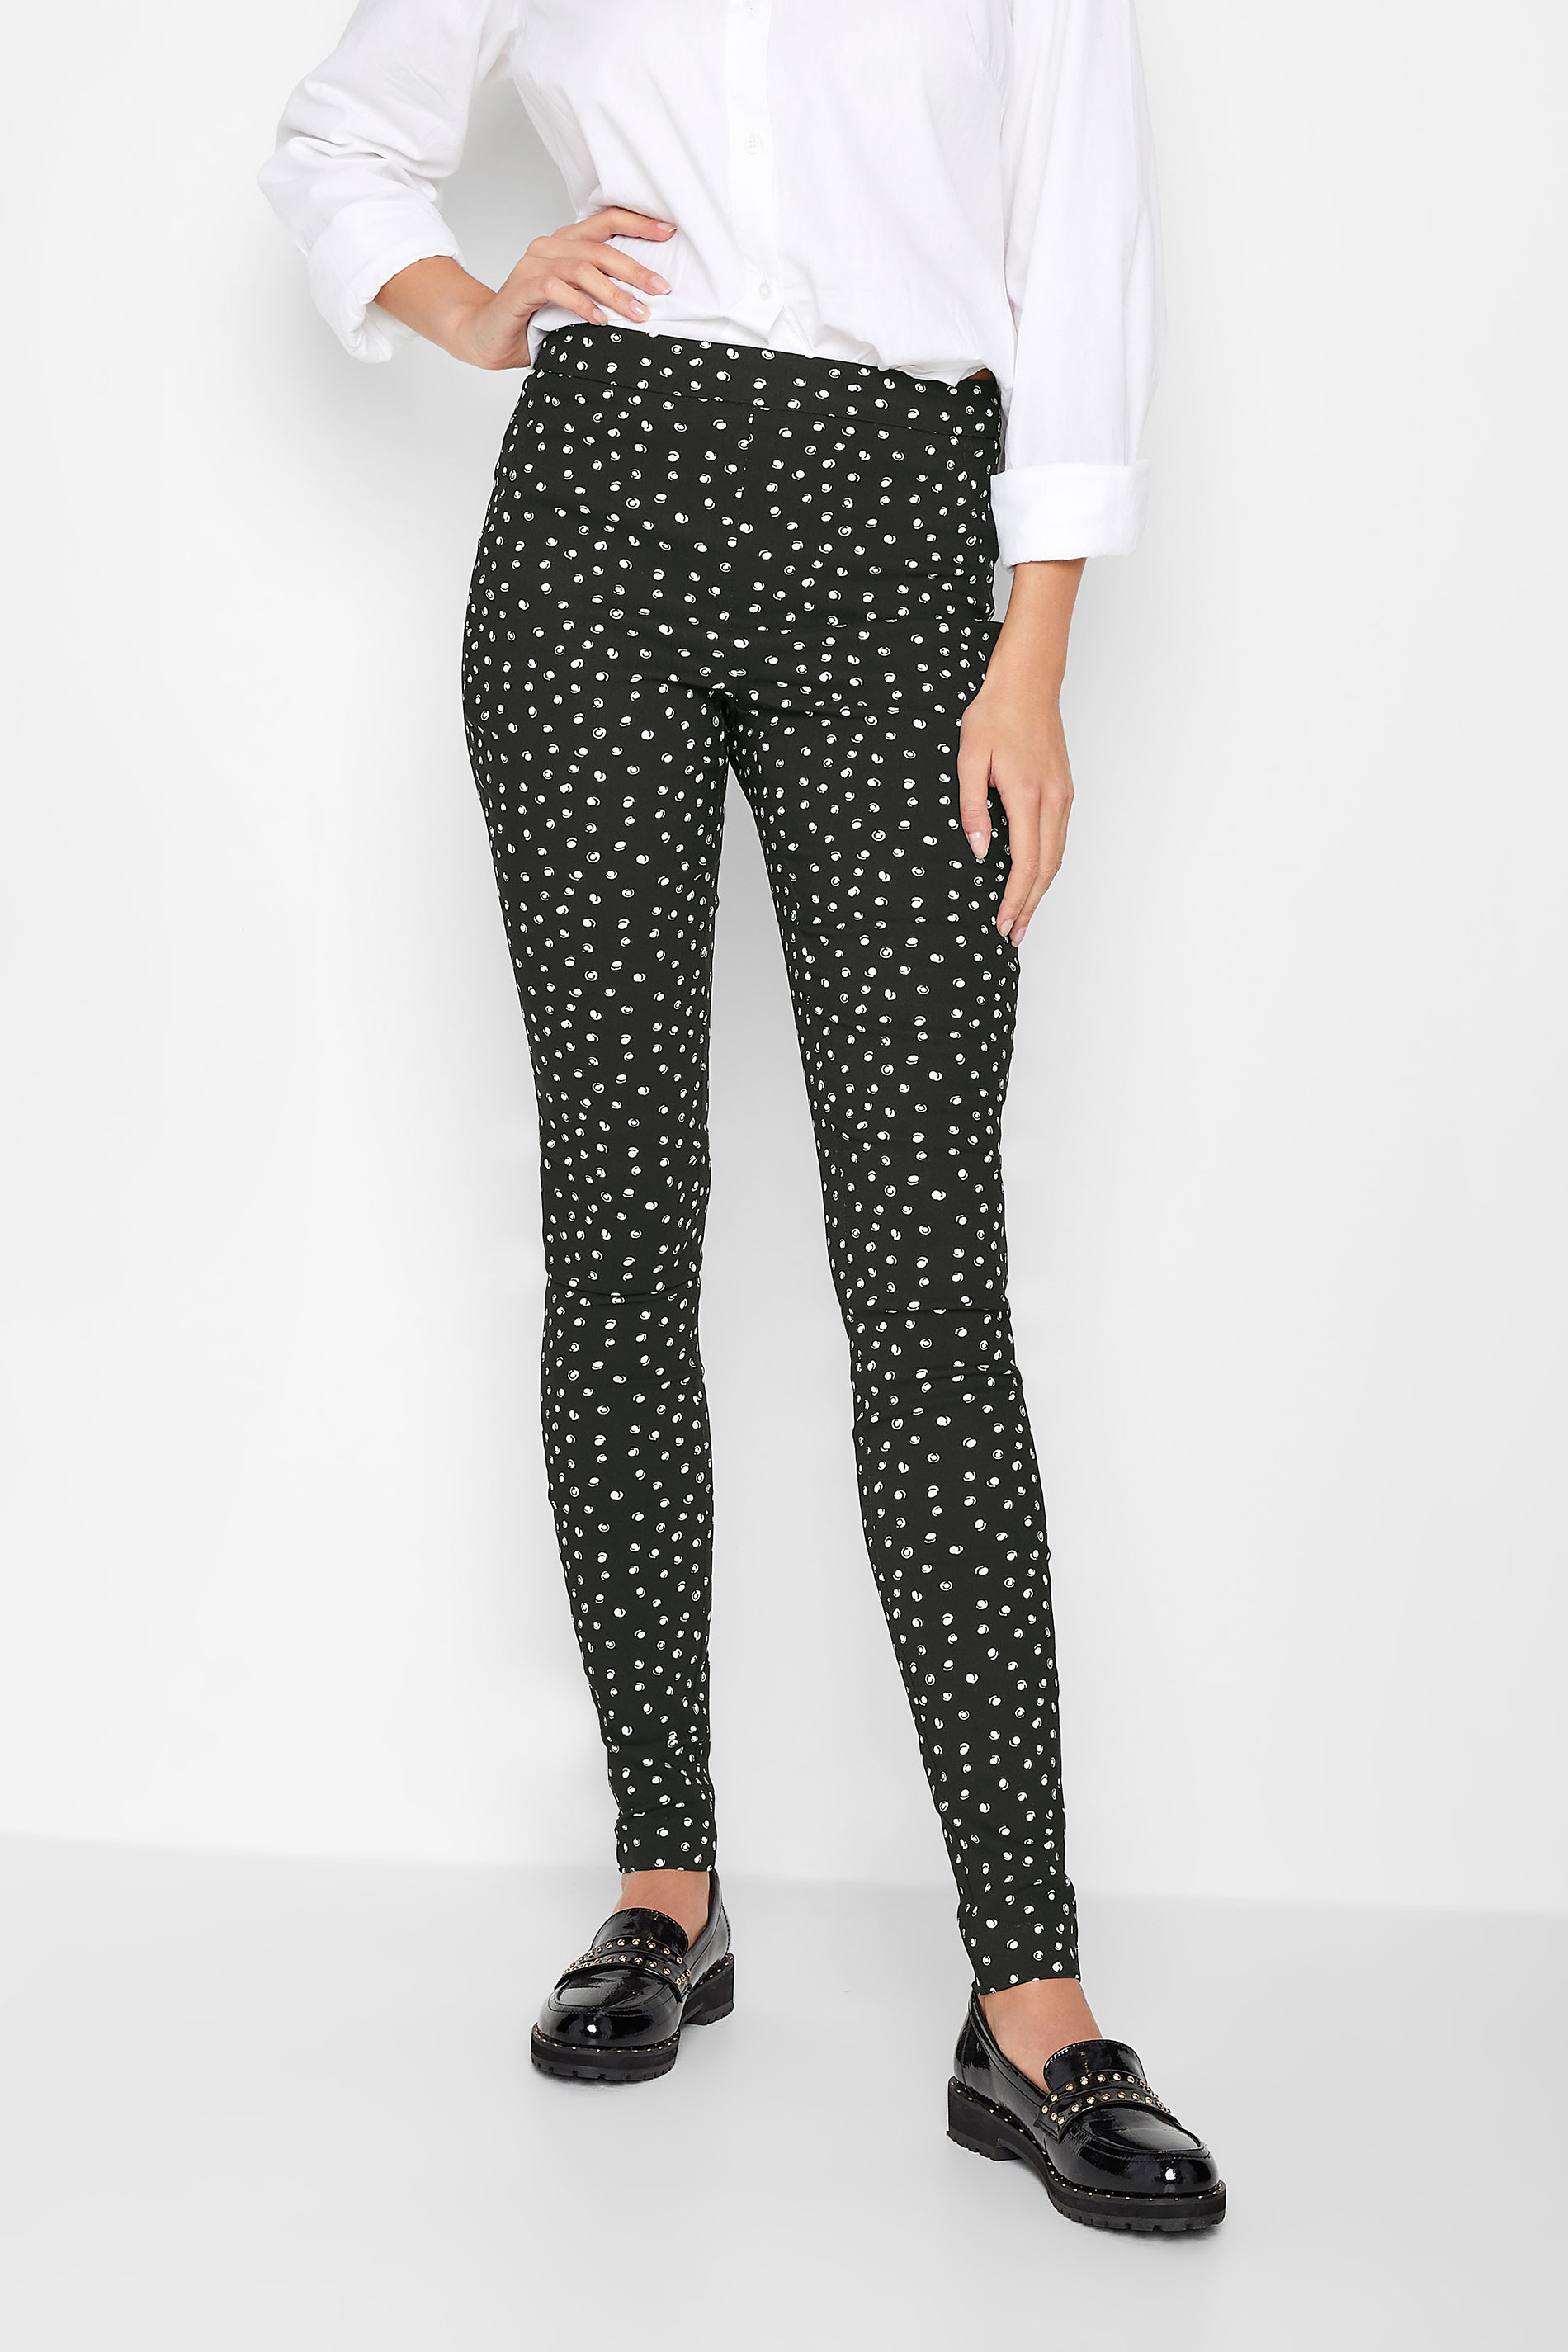 LTS Tall Women's Black Polka Dot Stretch Skinny Trousers | Long Tall Sally 1